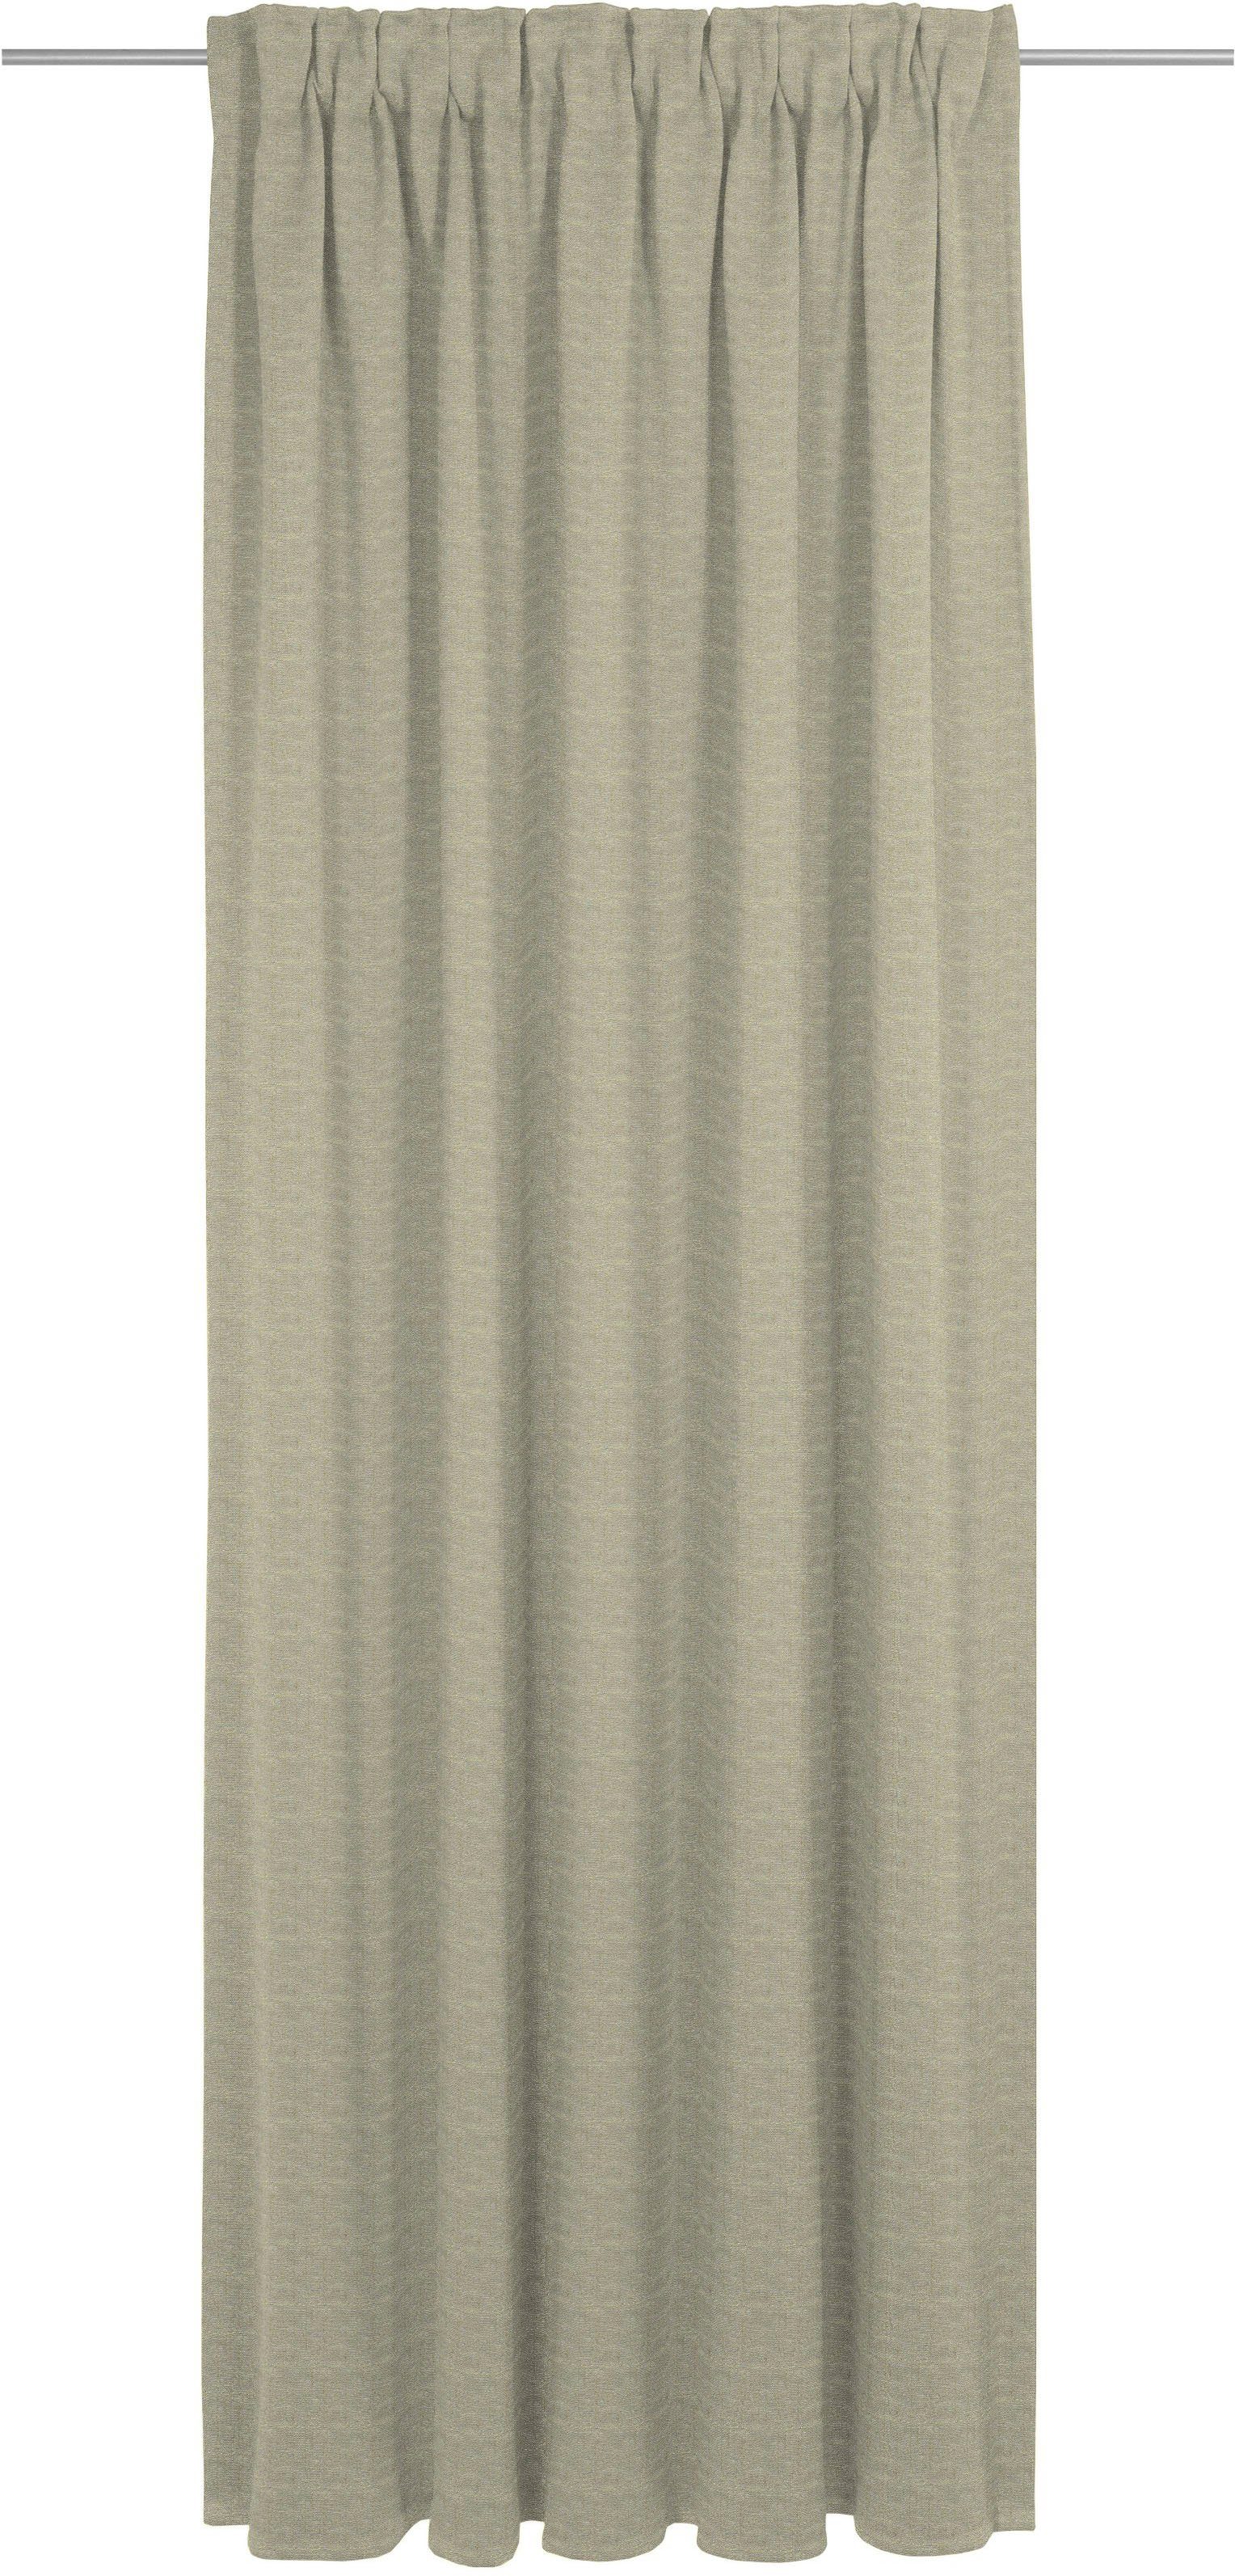 Vorhang Torbole, Wirth, Multifunktionsband (1 blickdicht, Jacquard St), lindgrün